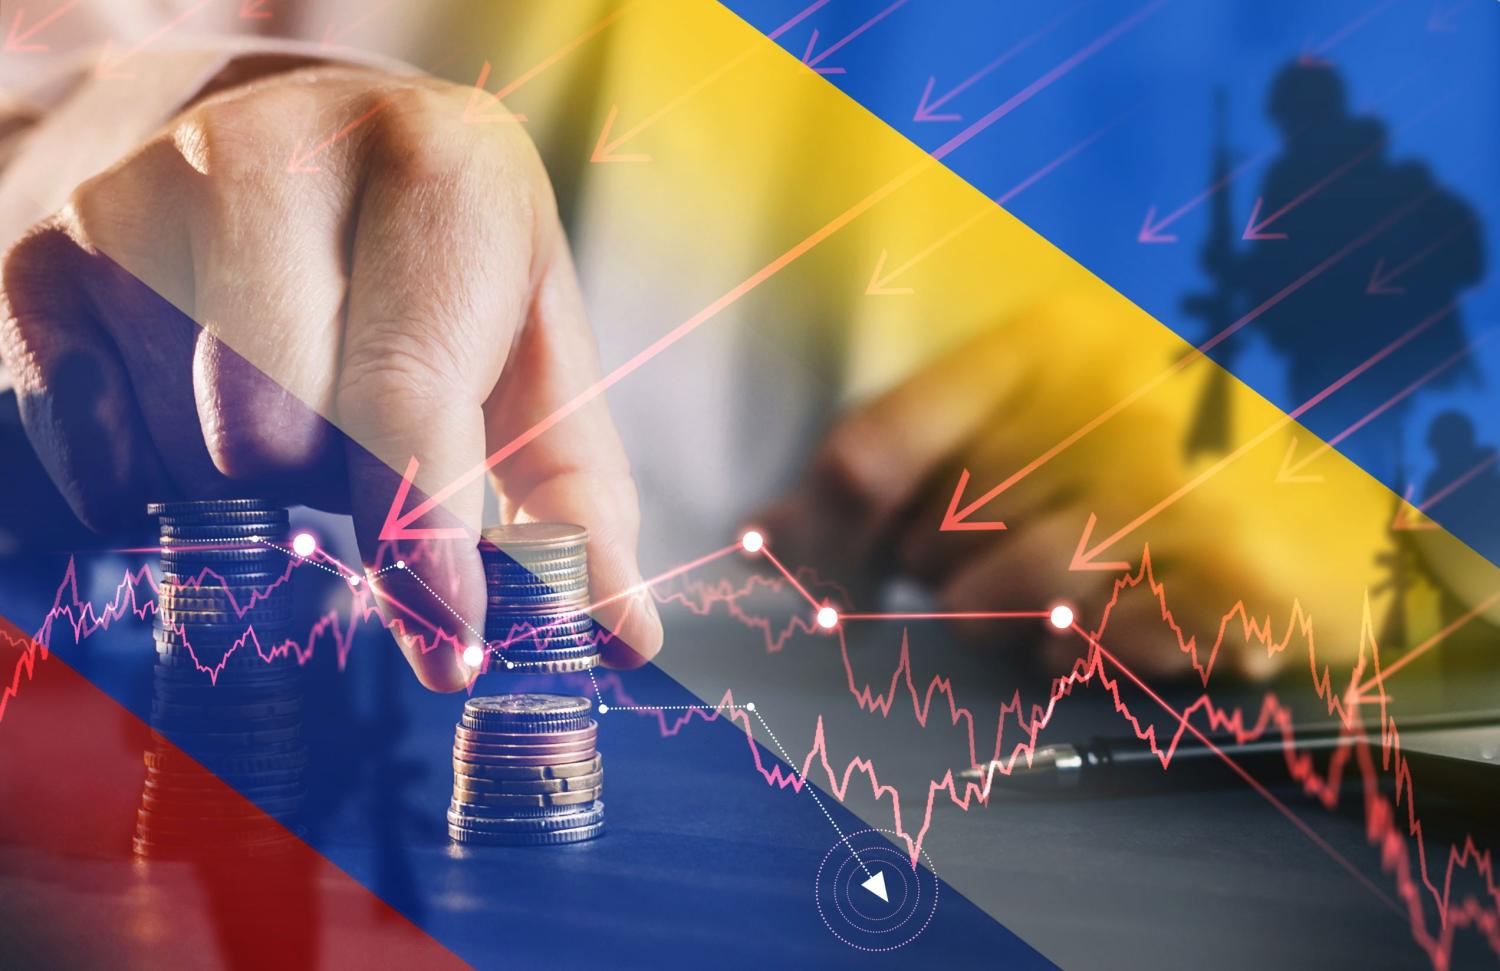 Ukraine and Russia flag with economic indicators